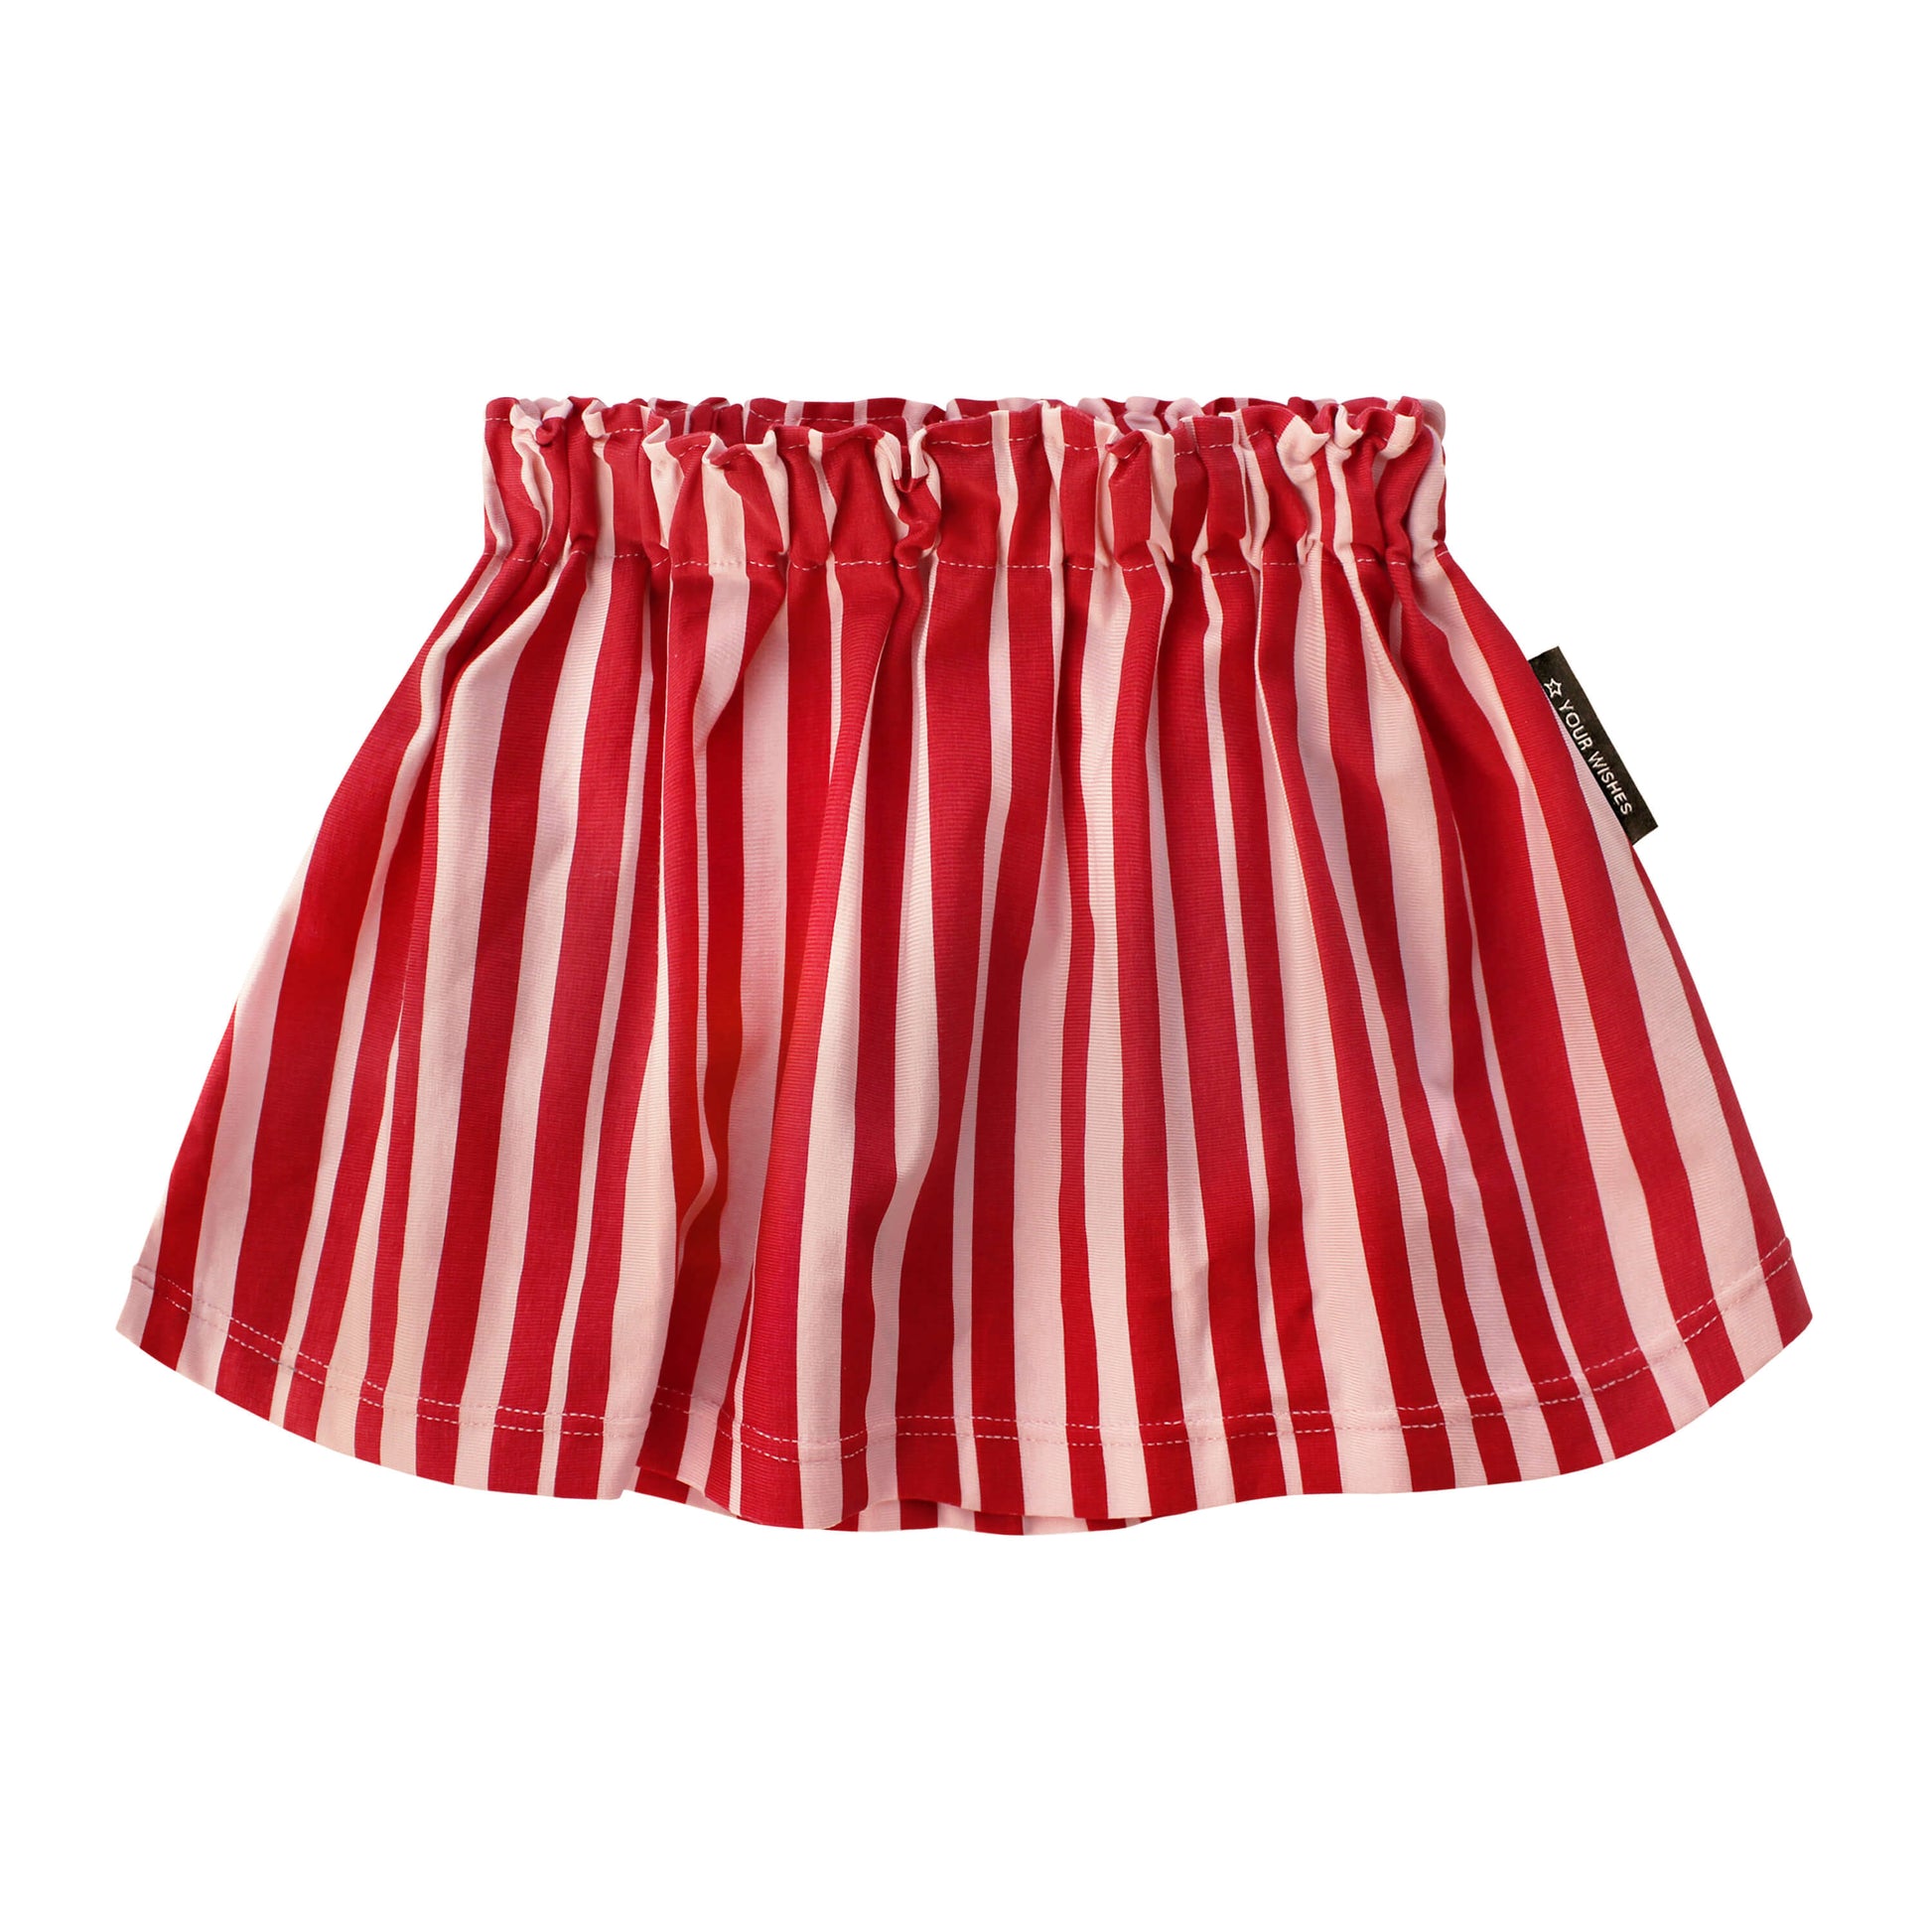 Your Wishes Skirt Pink Stripes - Meisjes Rok - Roze1